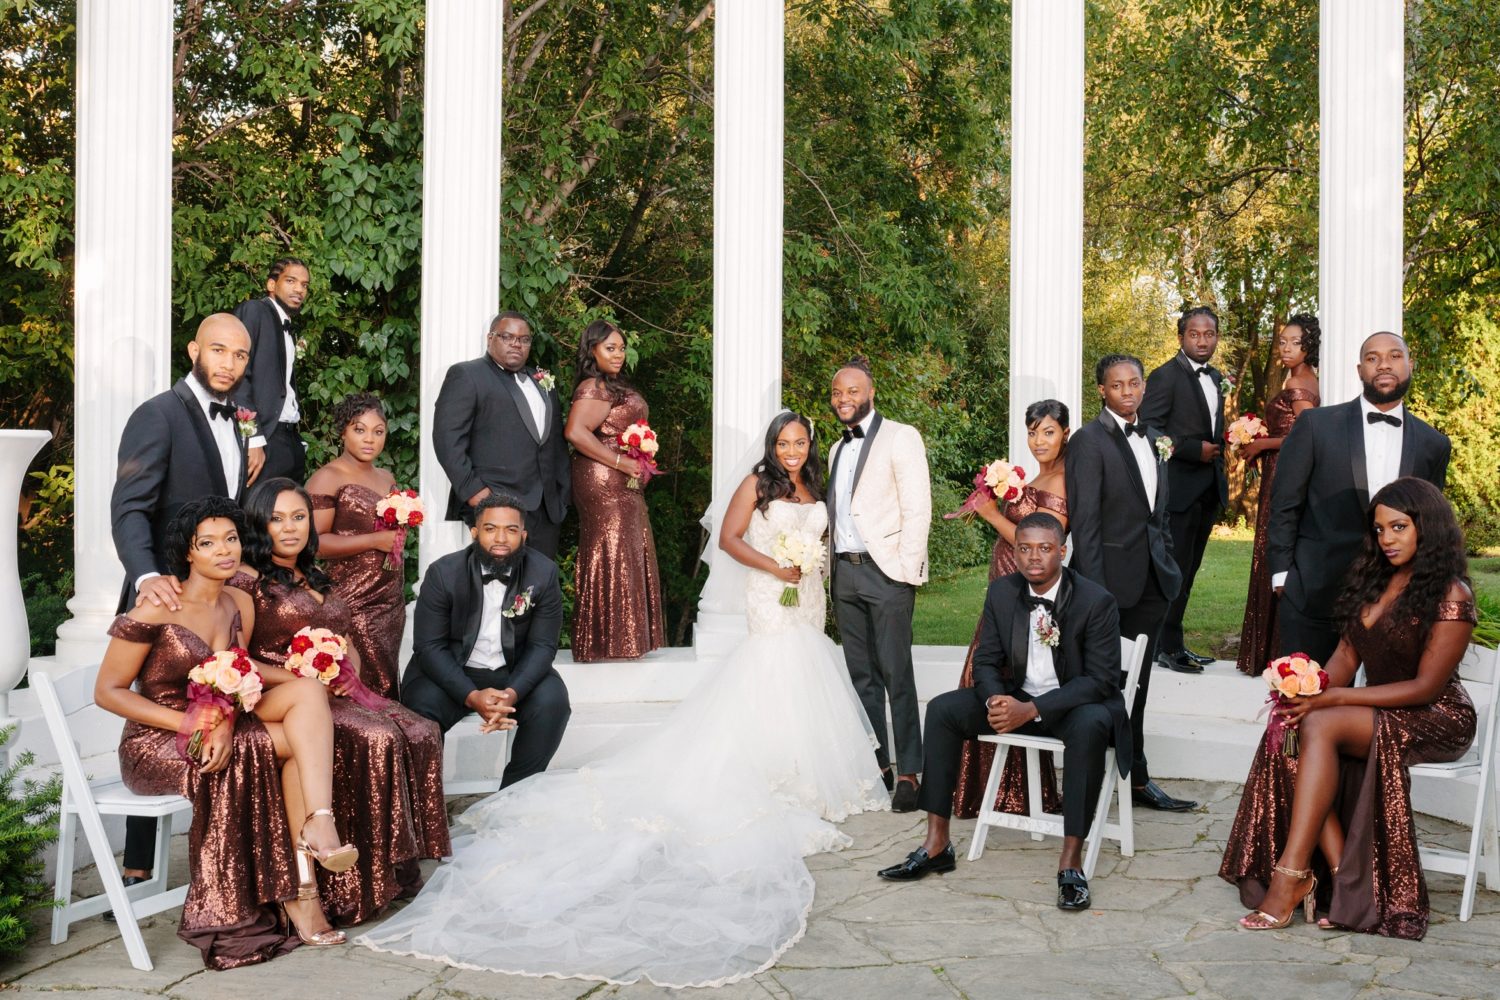 Large Bridal Party wedding photo in Atlanta | Photo by Samantha Clarke